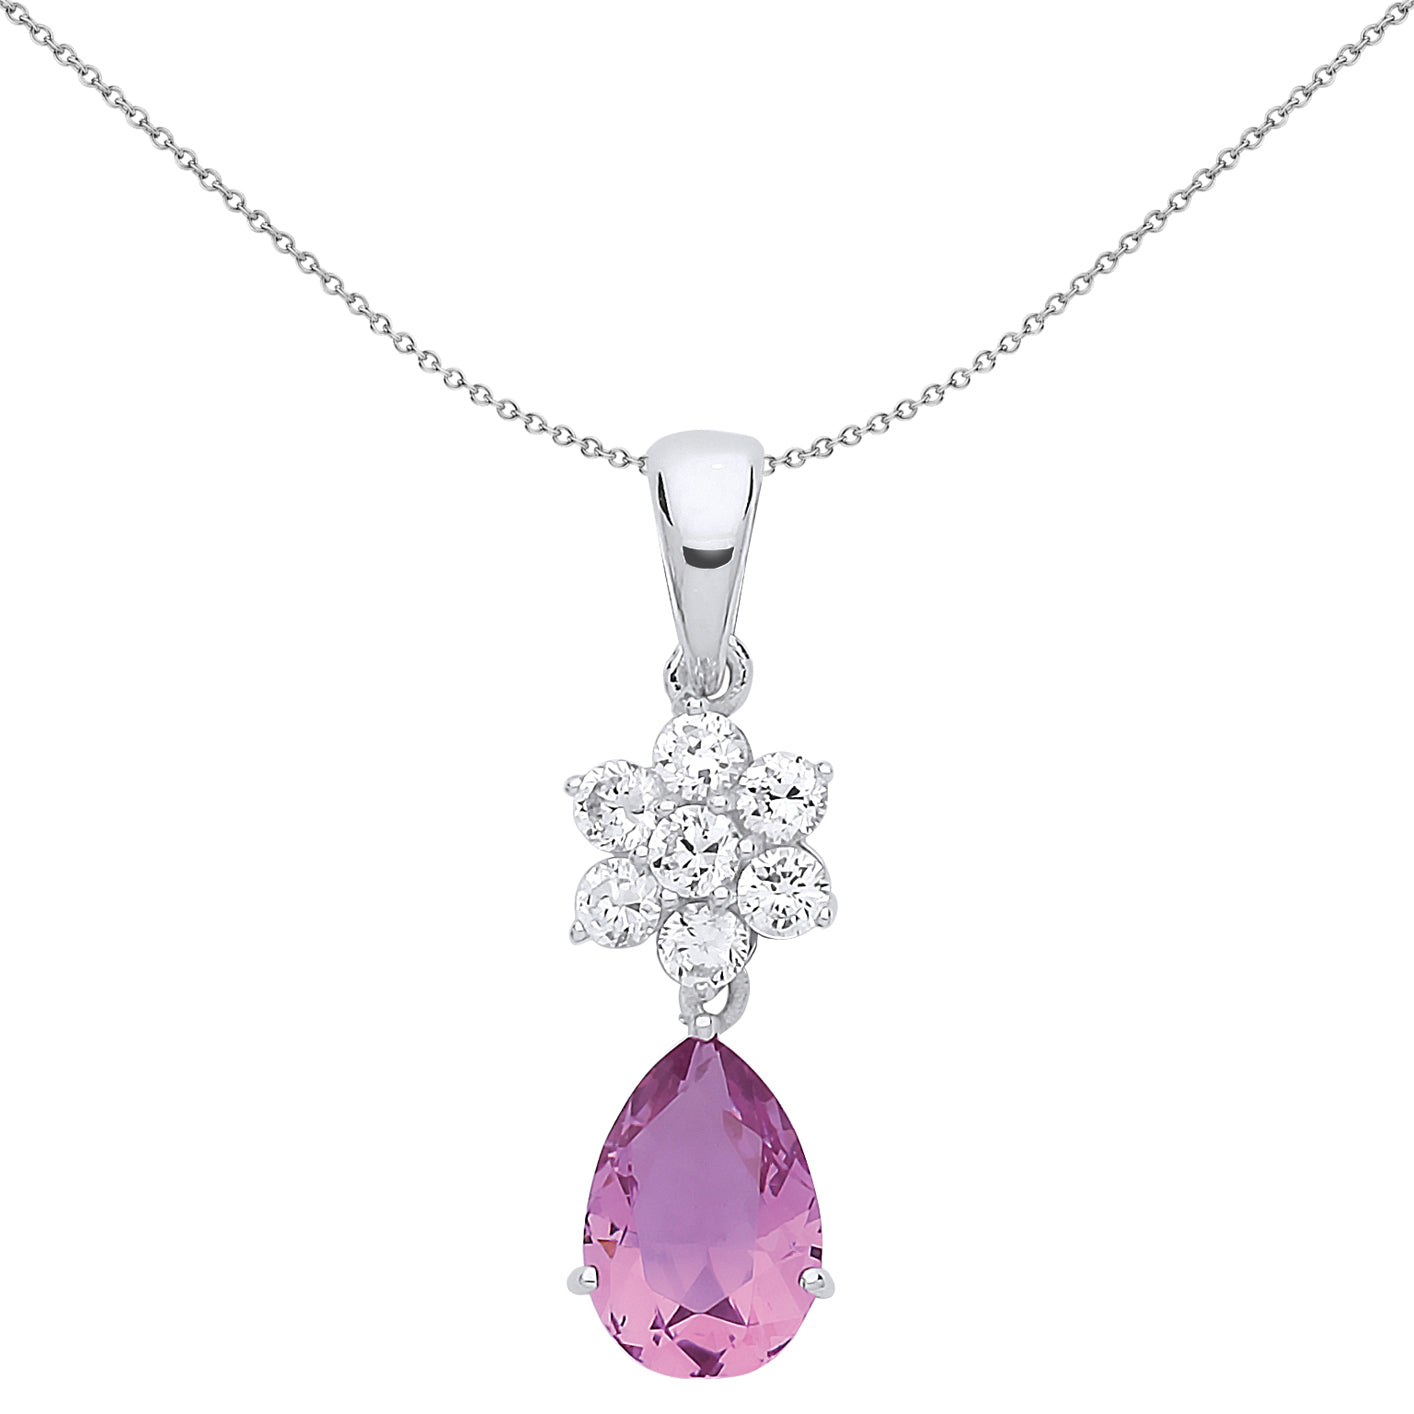 Silver  Lilac Pear Cut CZ Purple Rain Pendant Necklace 18 inch - GVP549